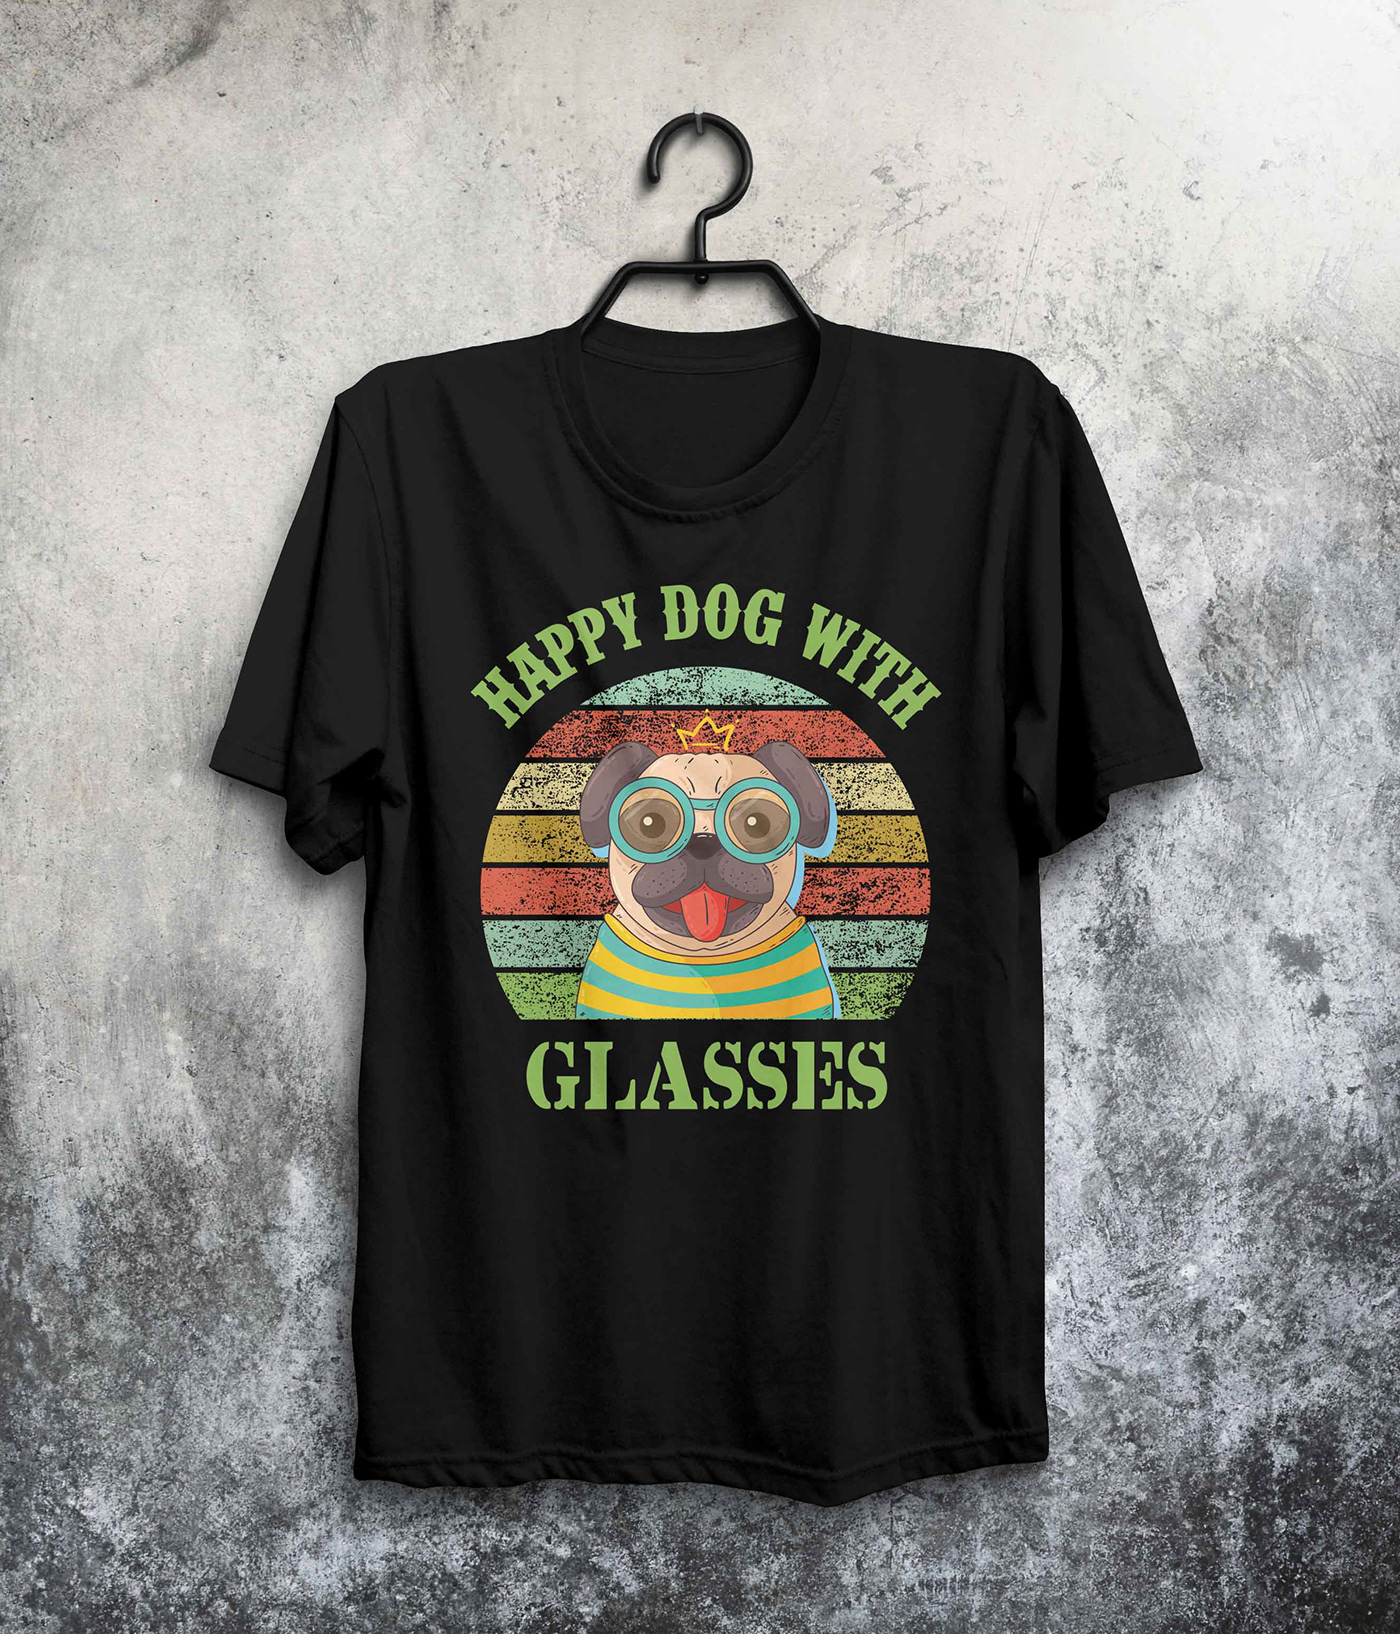 Clothing Custom CustomTshirt dog dog tshirt Graphic Tshirt ILLUSTRATION  T Shirt t shirt design t shirts